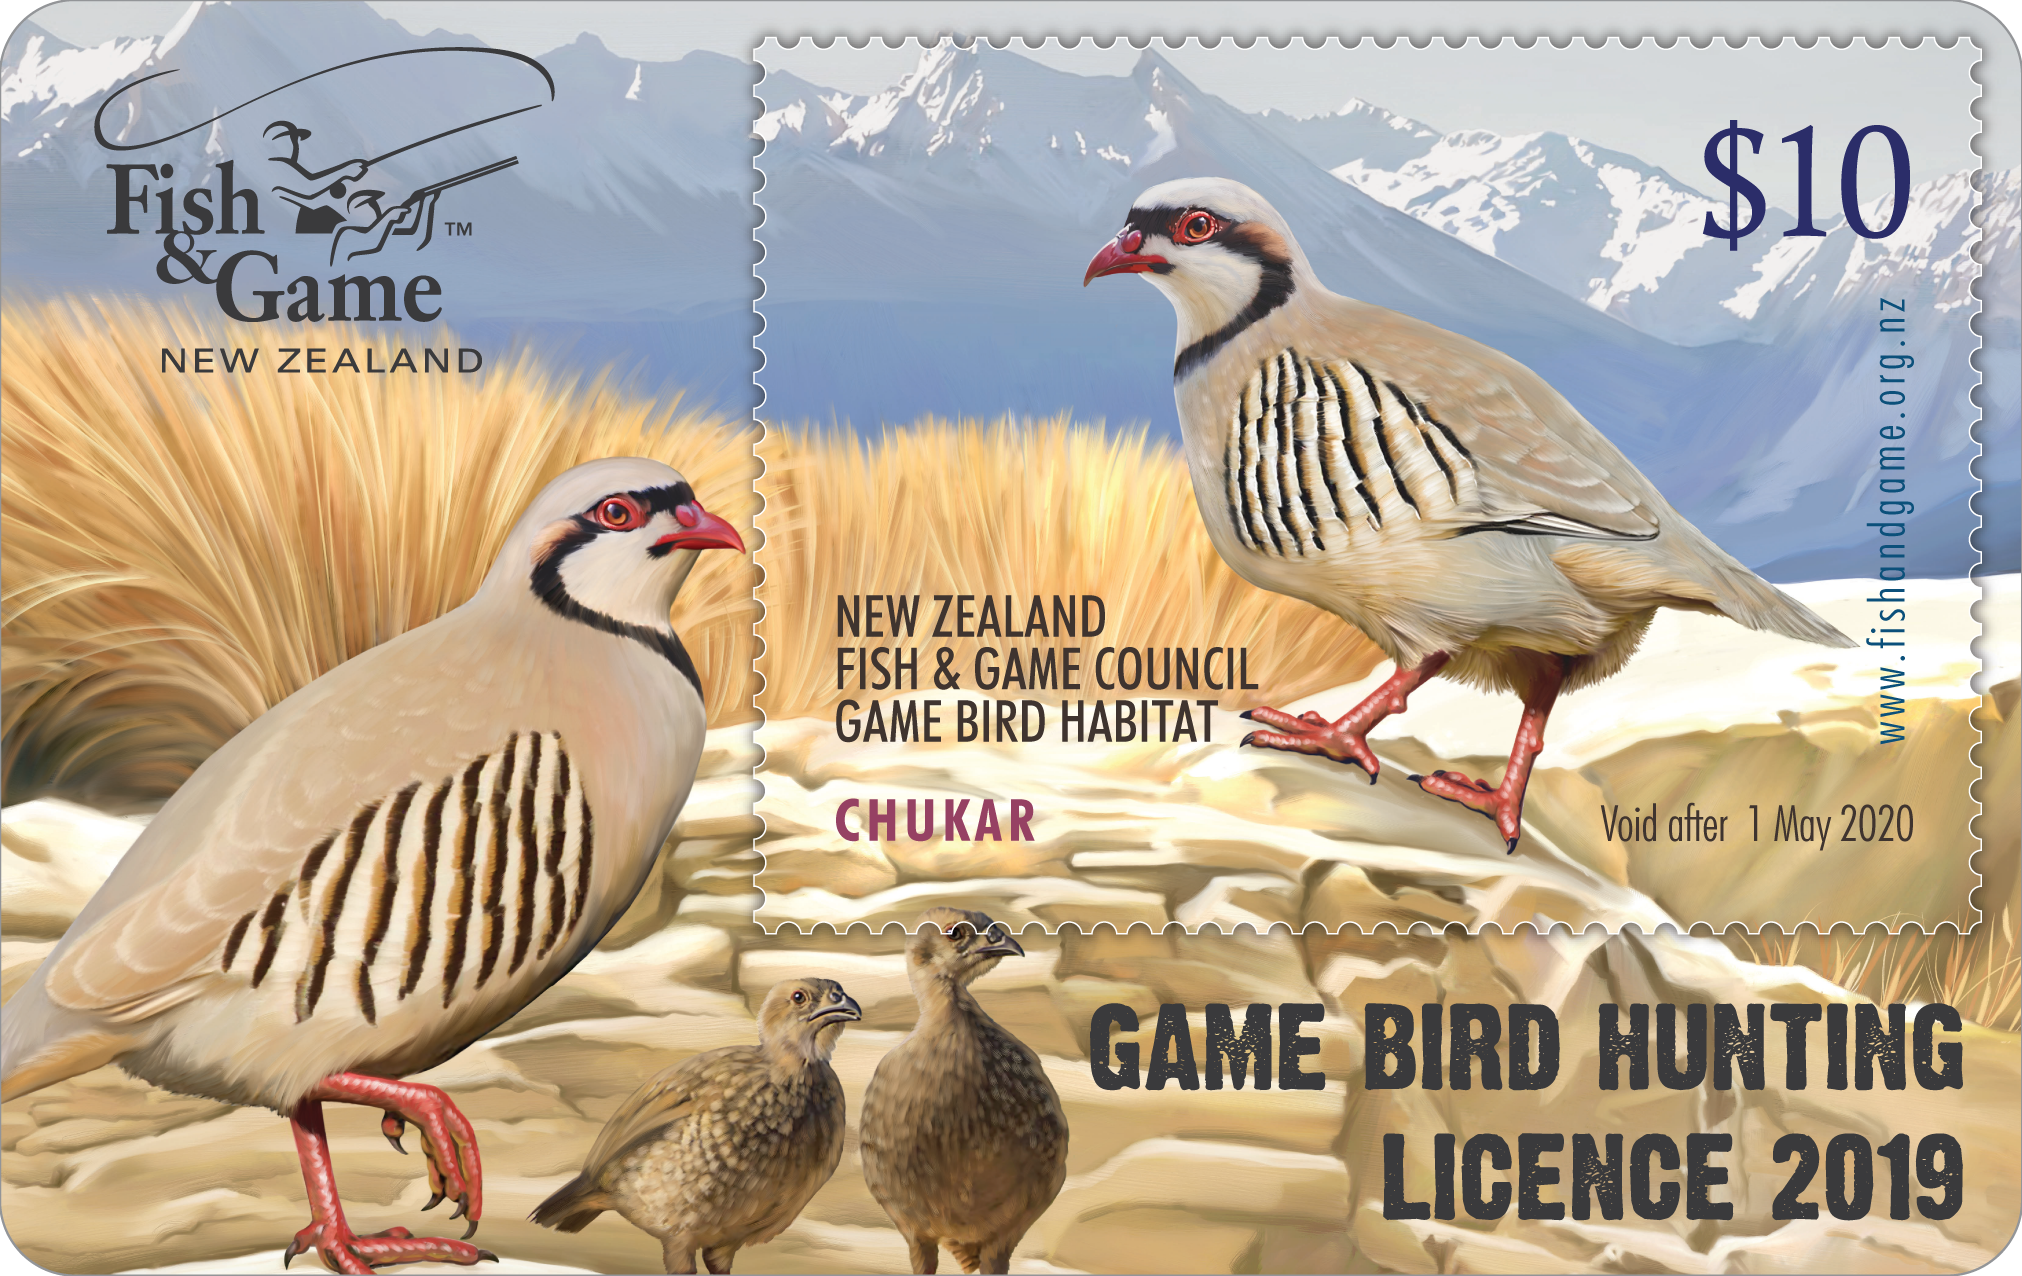 2019 Game Bird licence image11